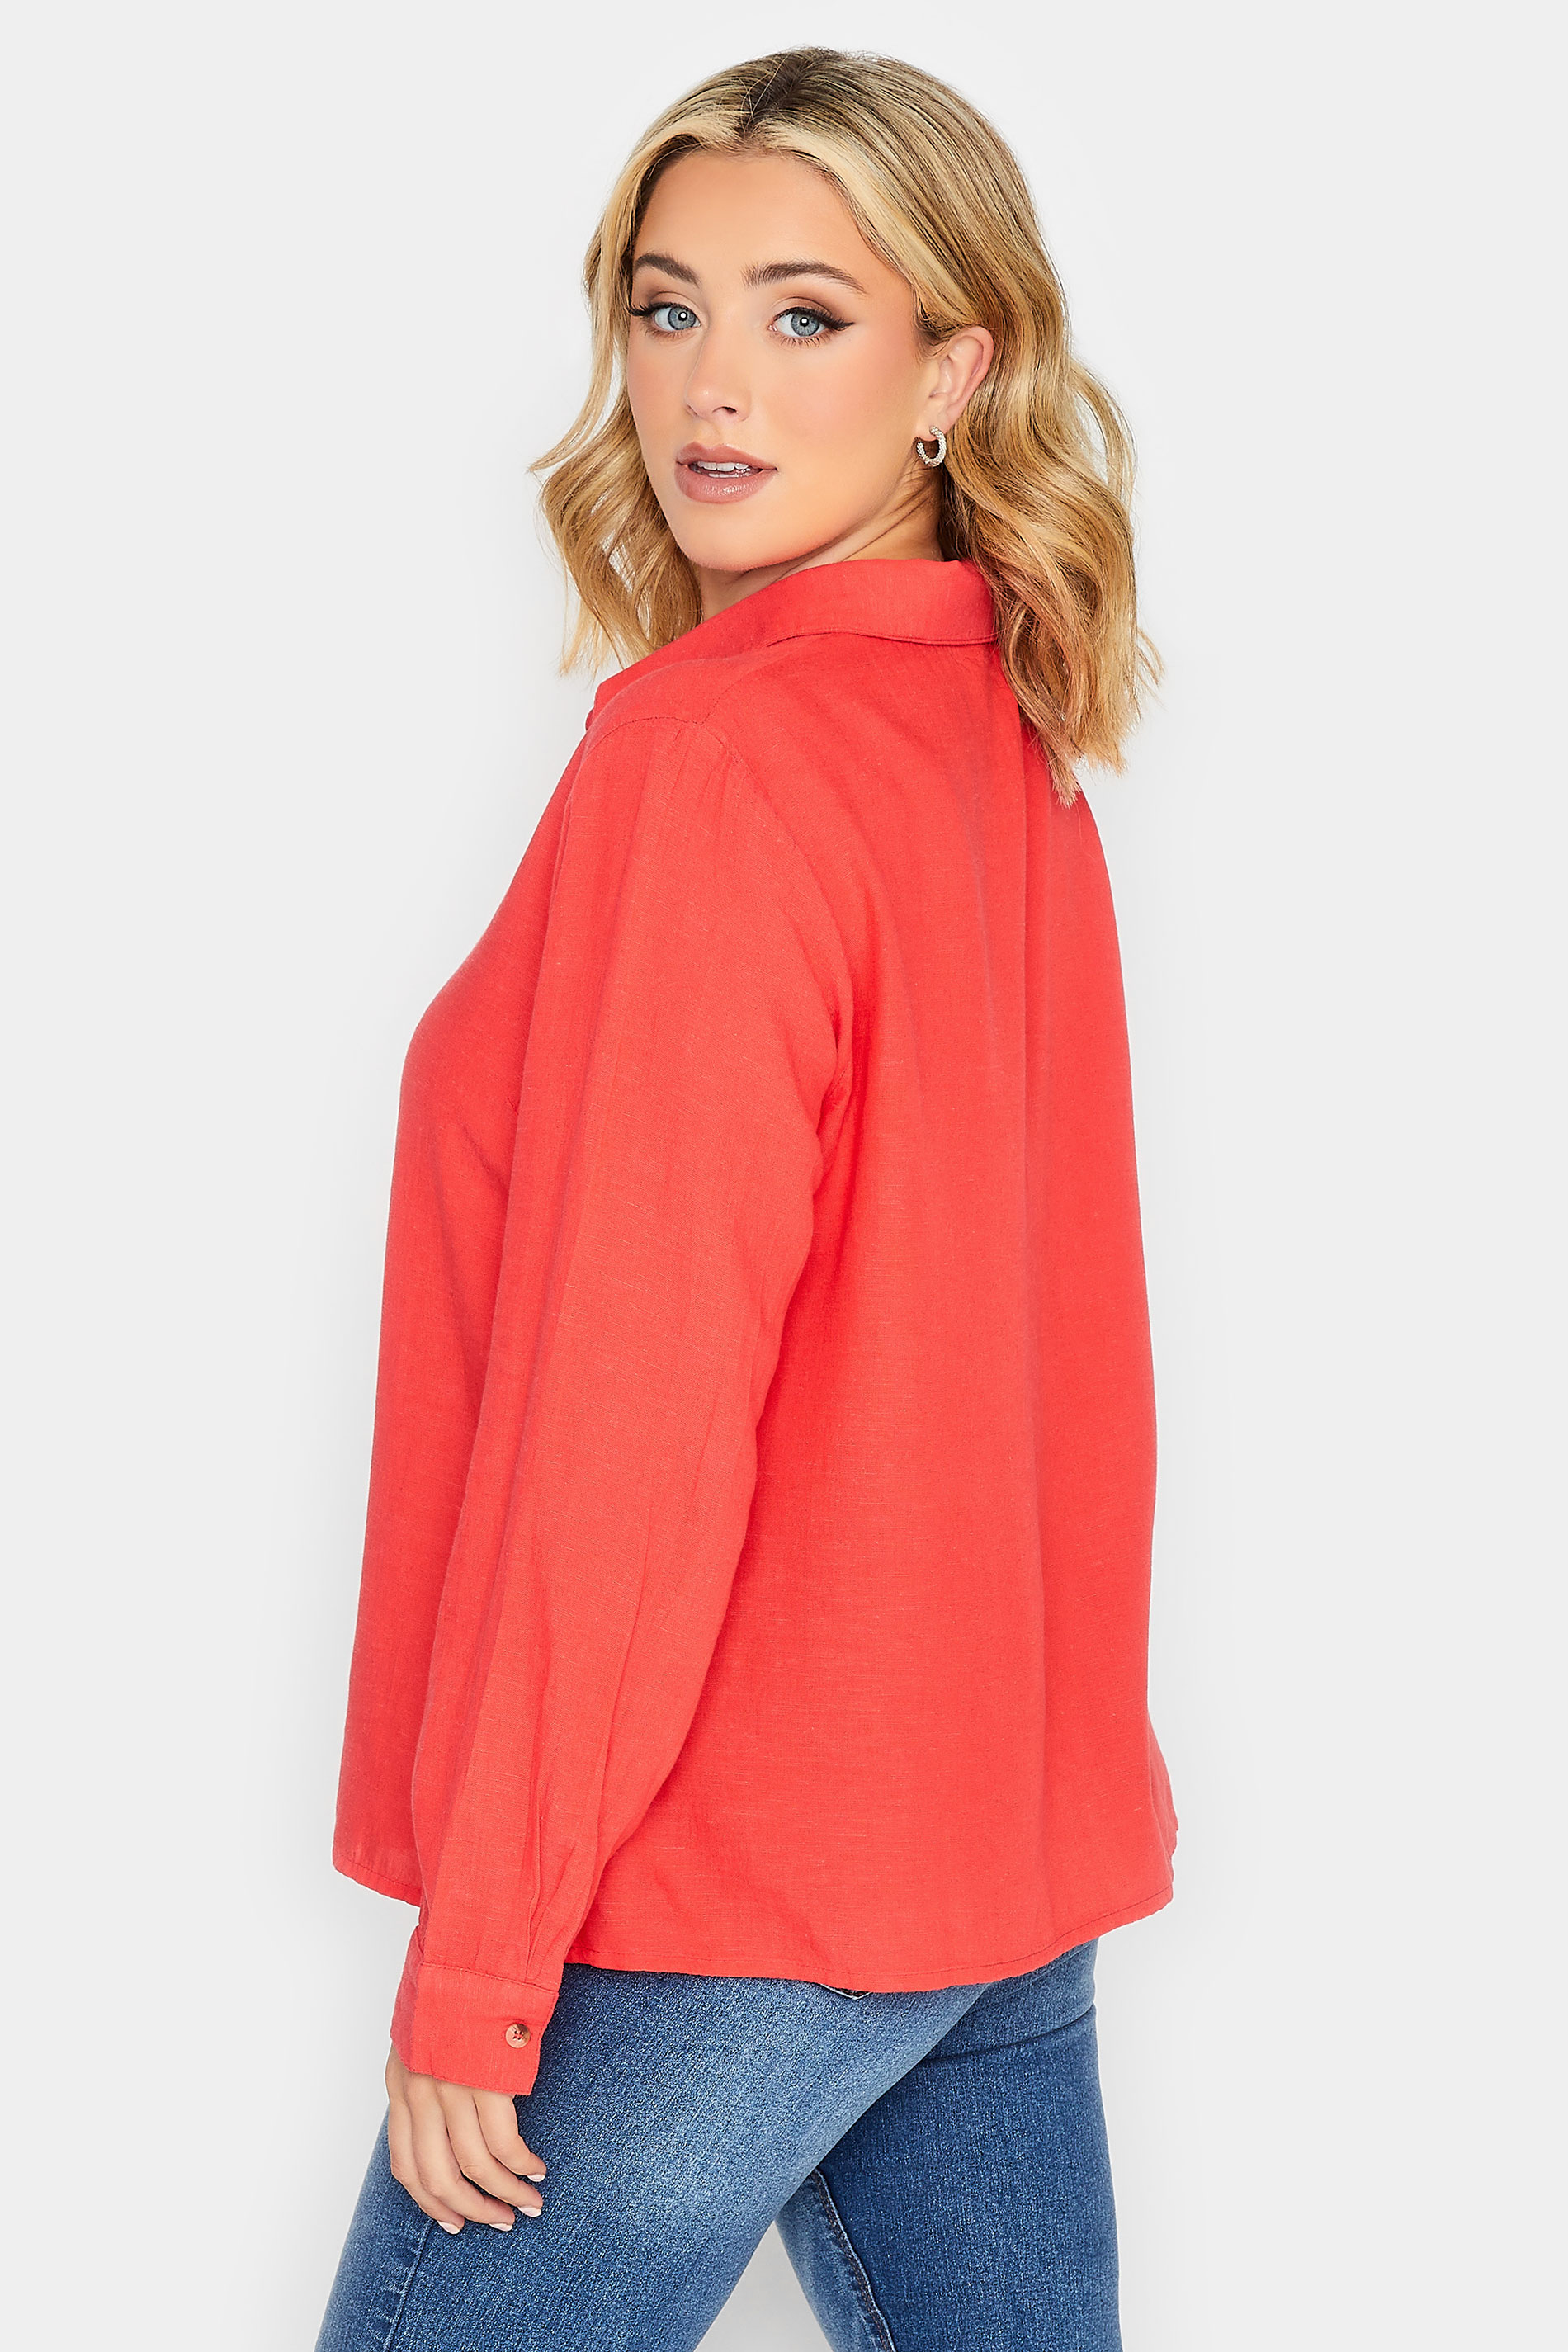 YOURS PETITE Plus Size Coral Orange Linen Blend Shirt | Yours Clothing 3